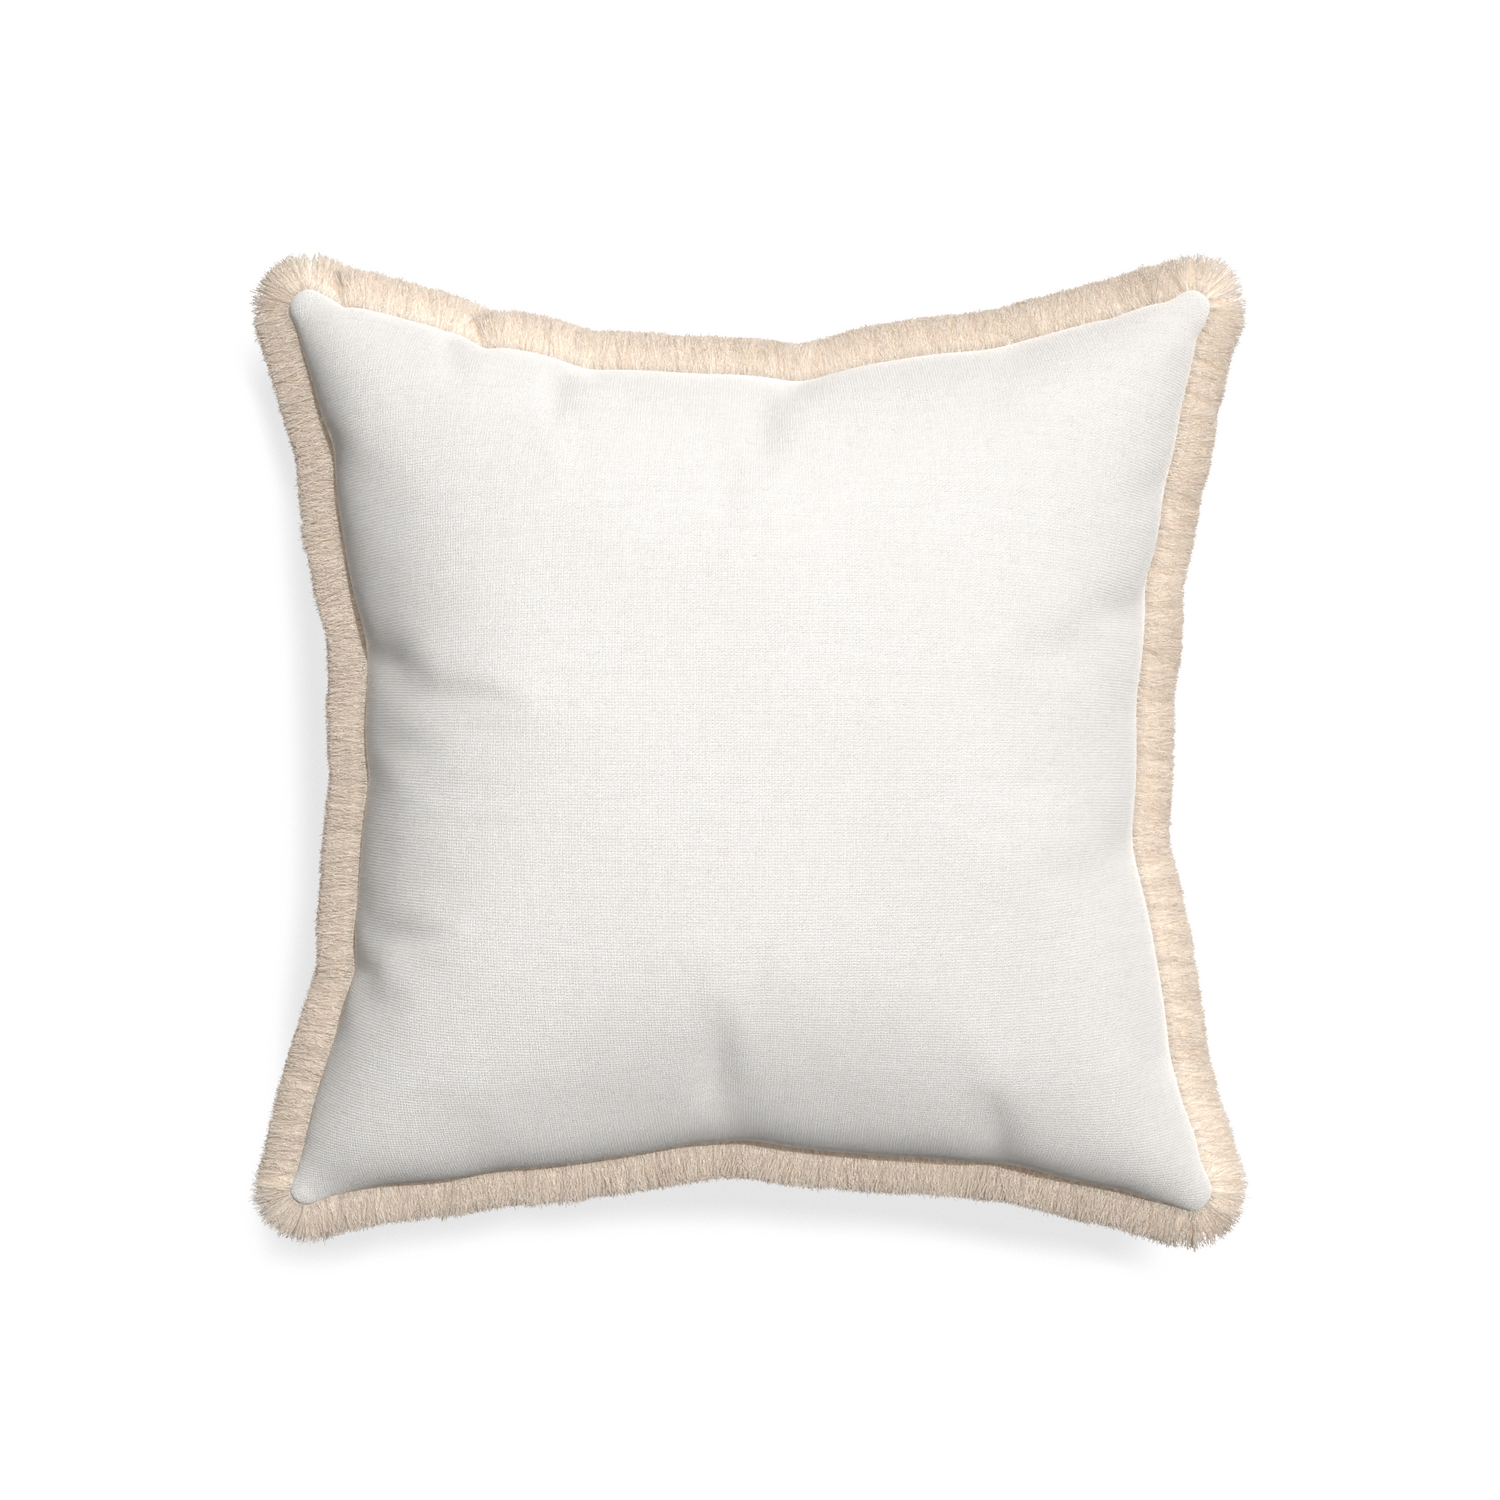 20-square flour custom pillow with cream fringe on white background